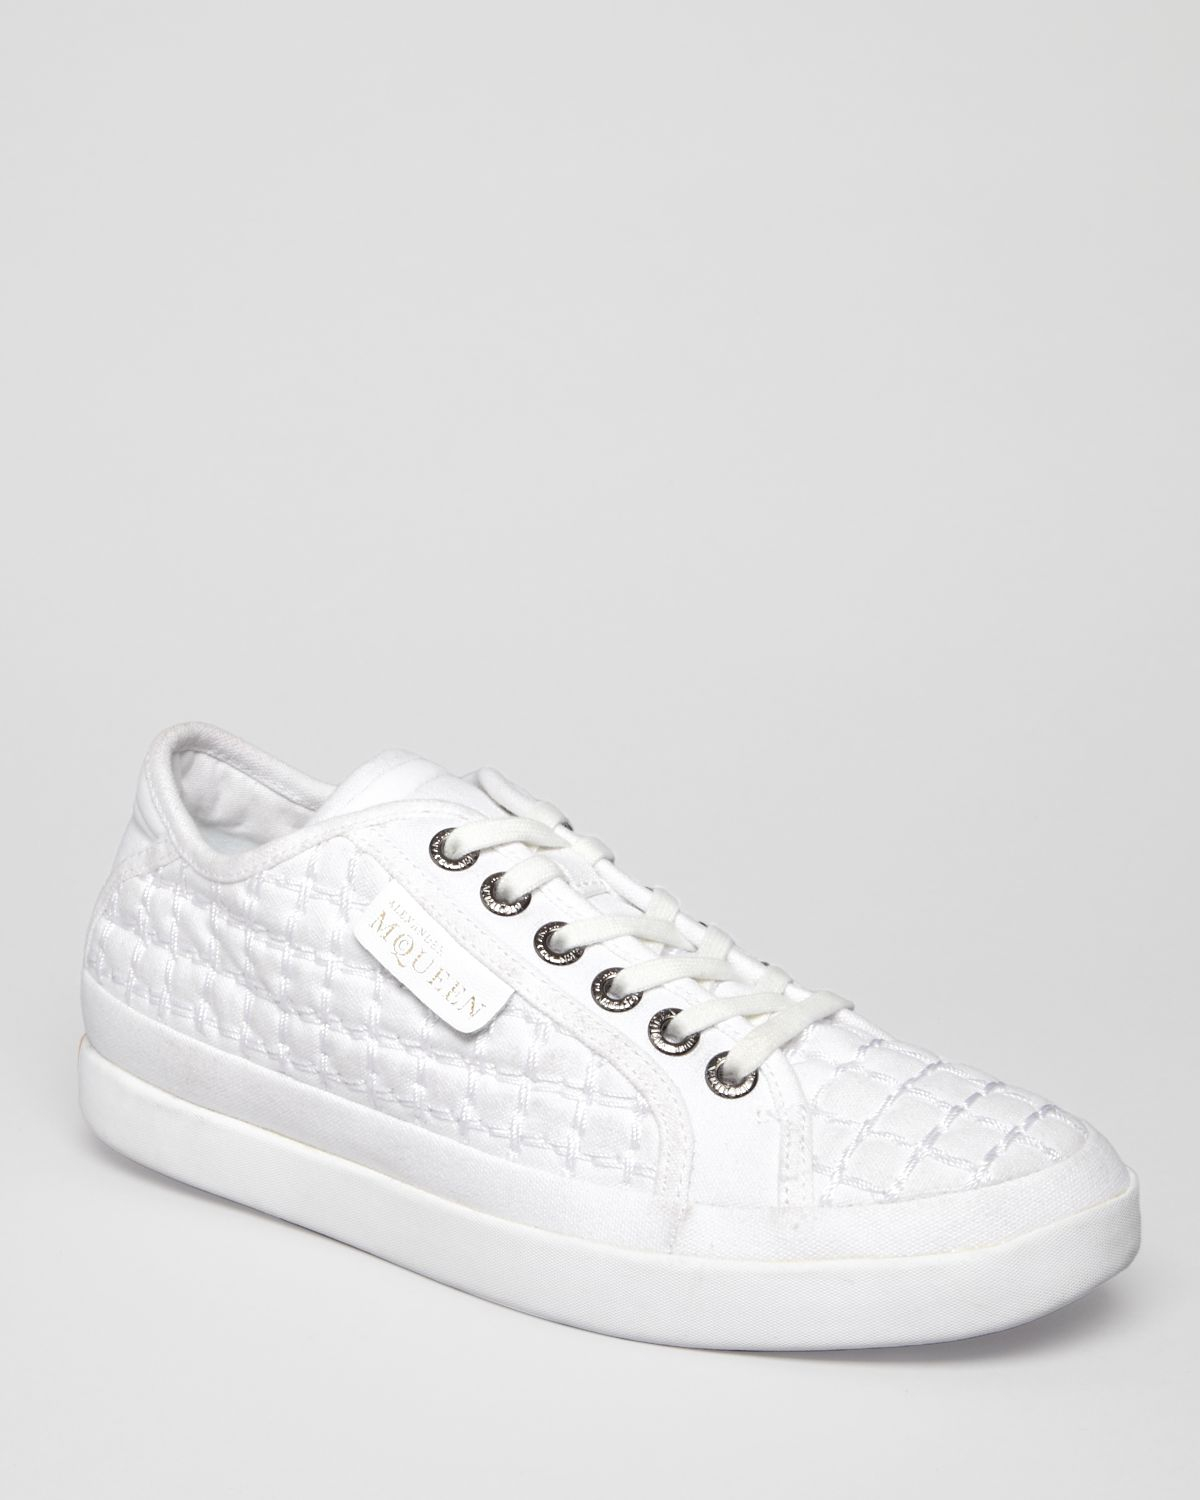 PUMA Alexander Mcqueen Rabble Lo Sneakers in White for Men | Lyst